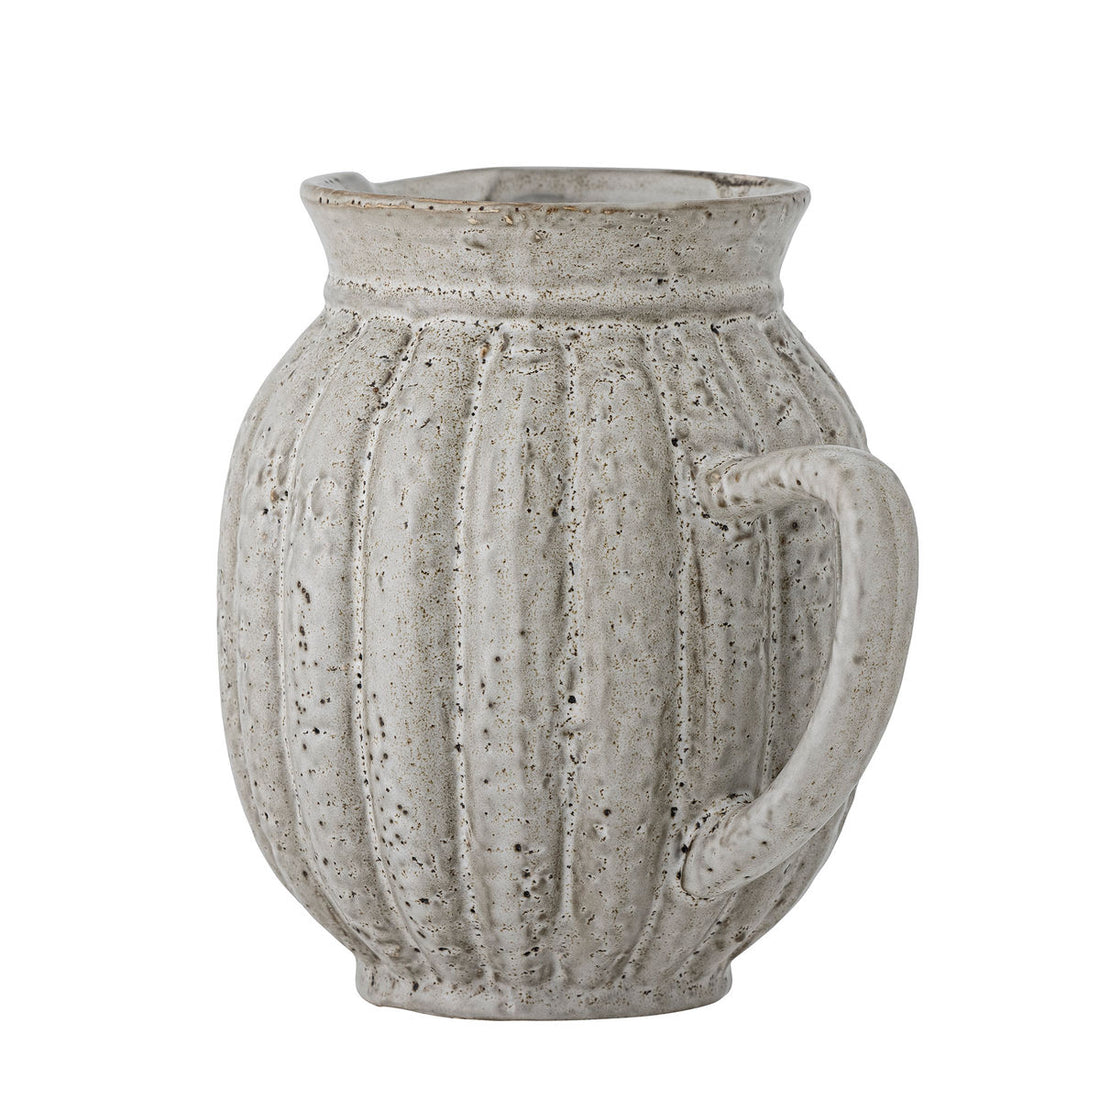 Bloomingville engrid pitcher, gray, stoneware